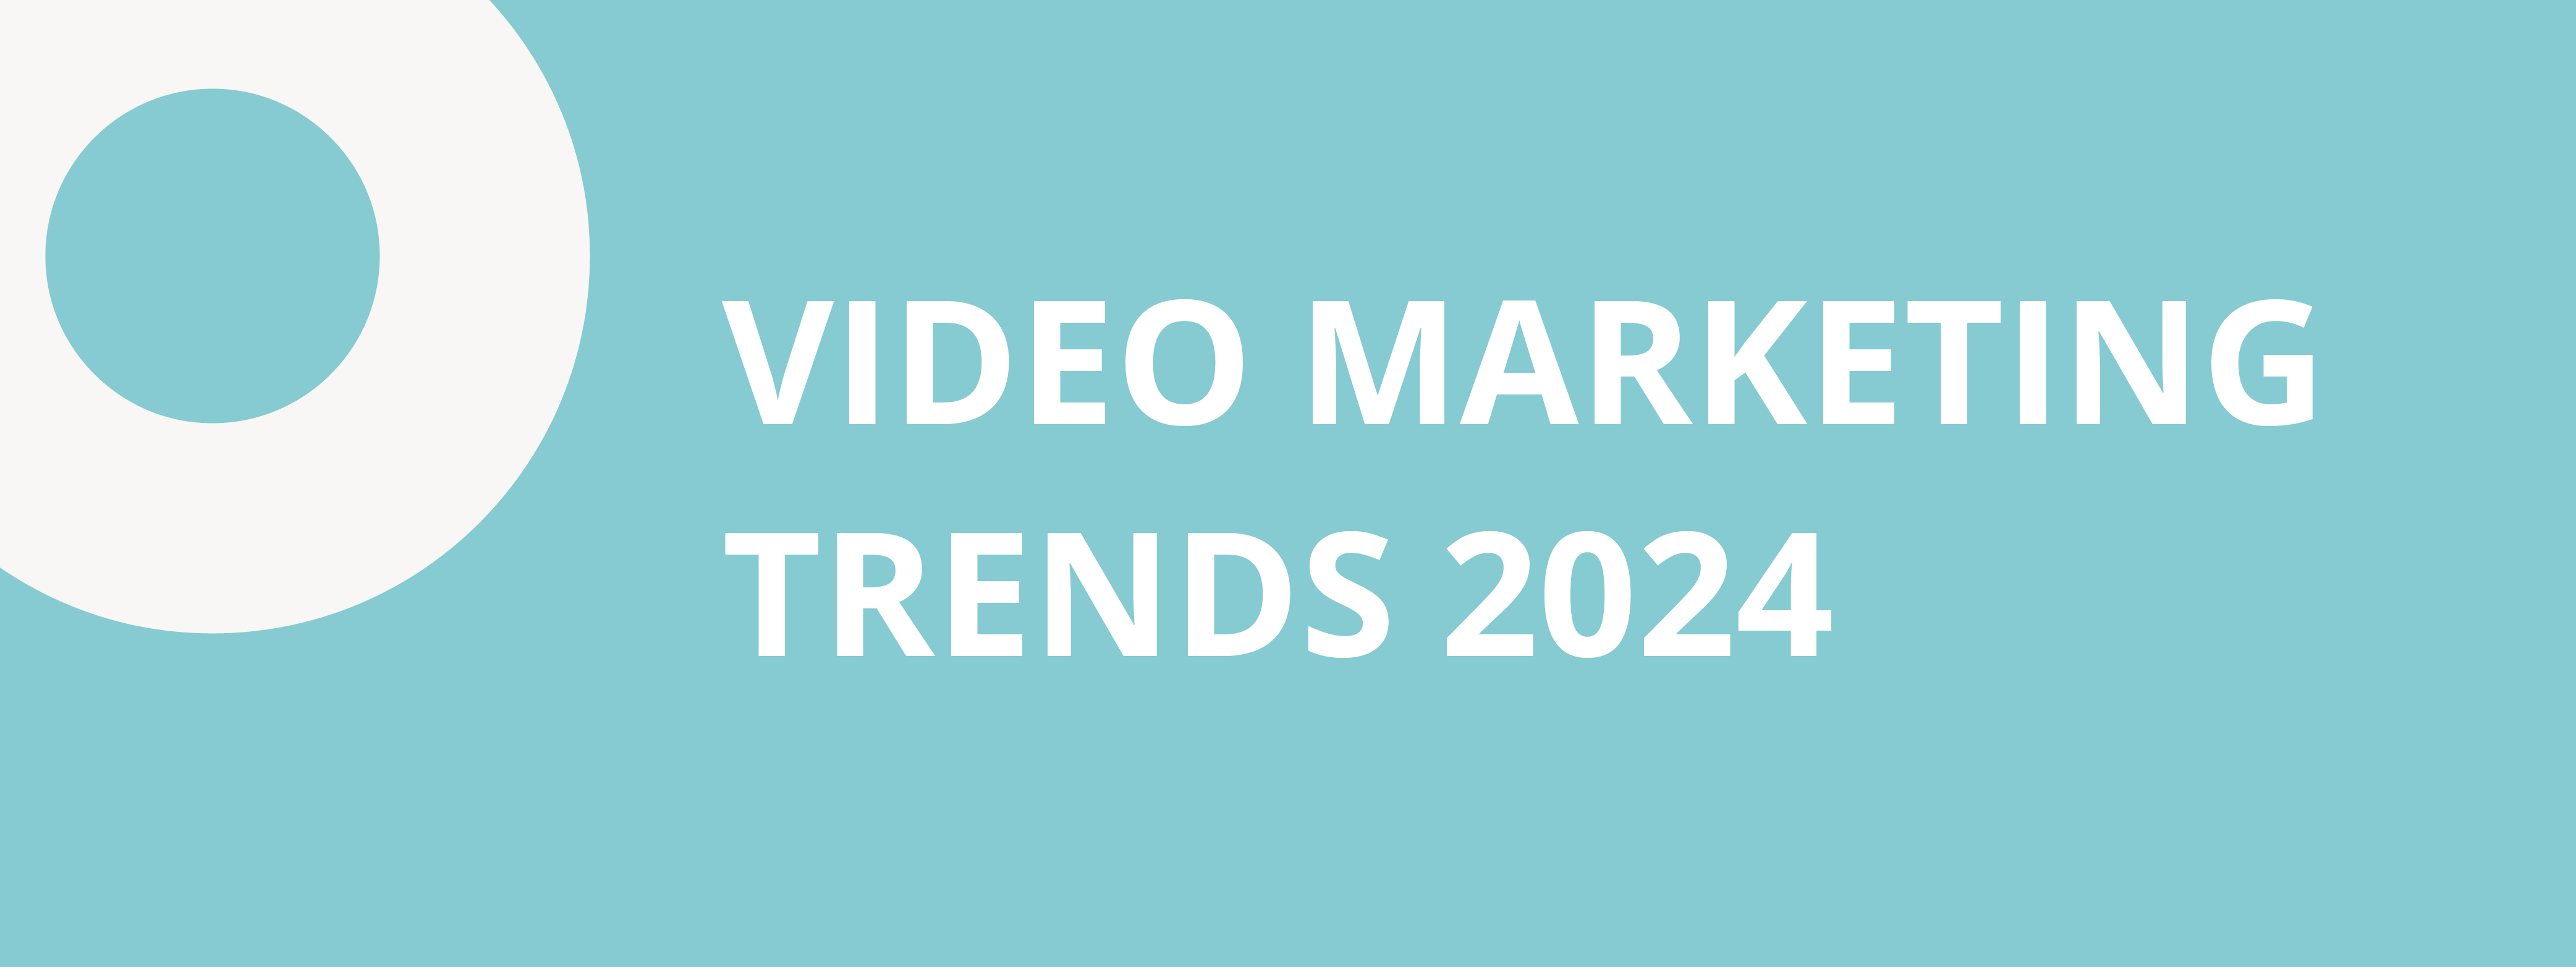 Video Marketing Trends 2024